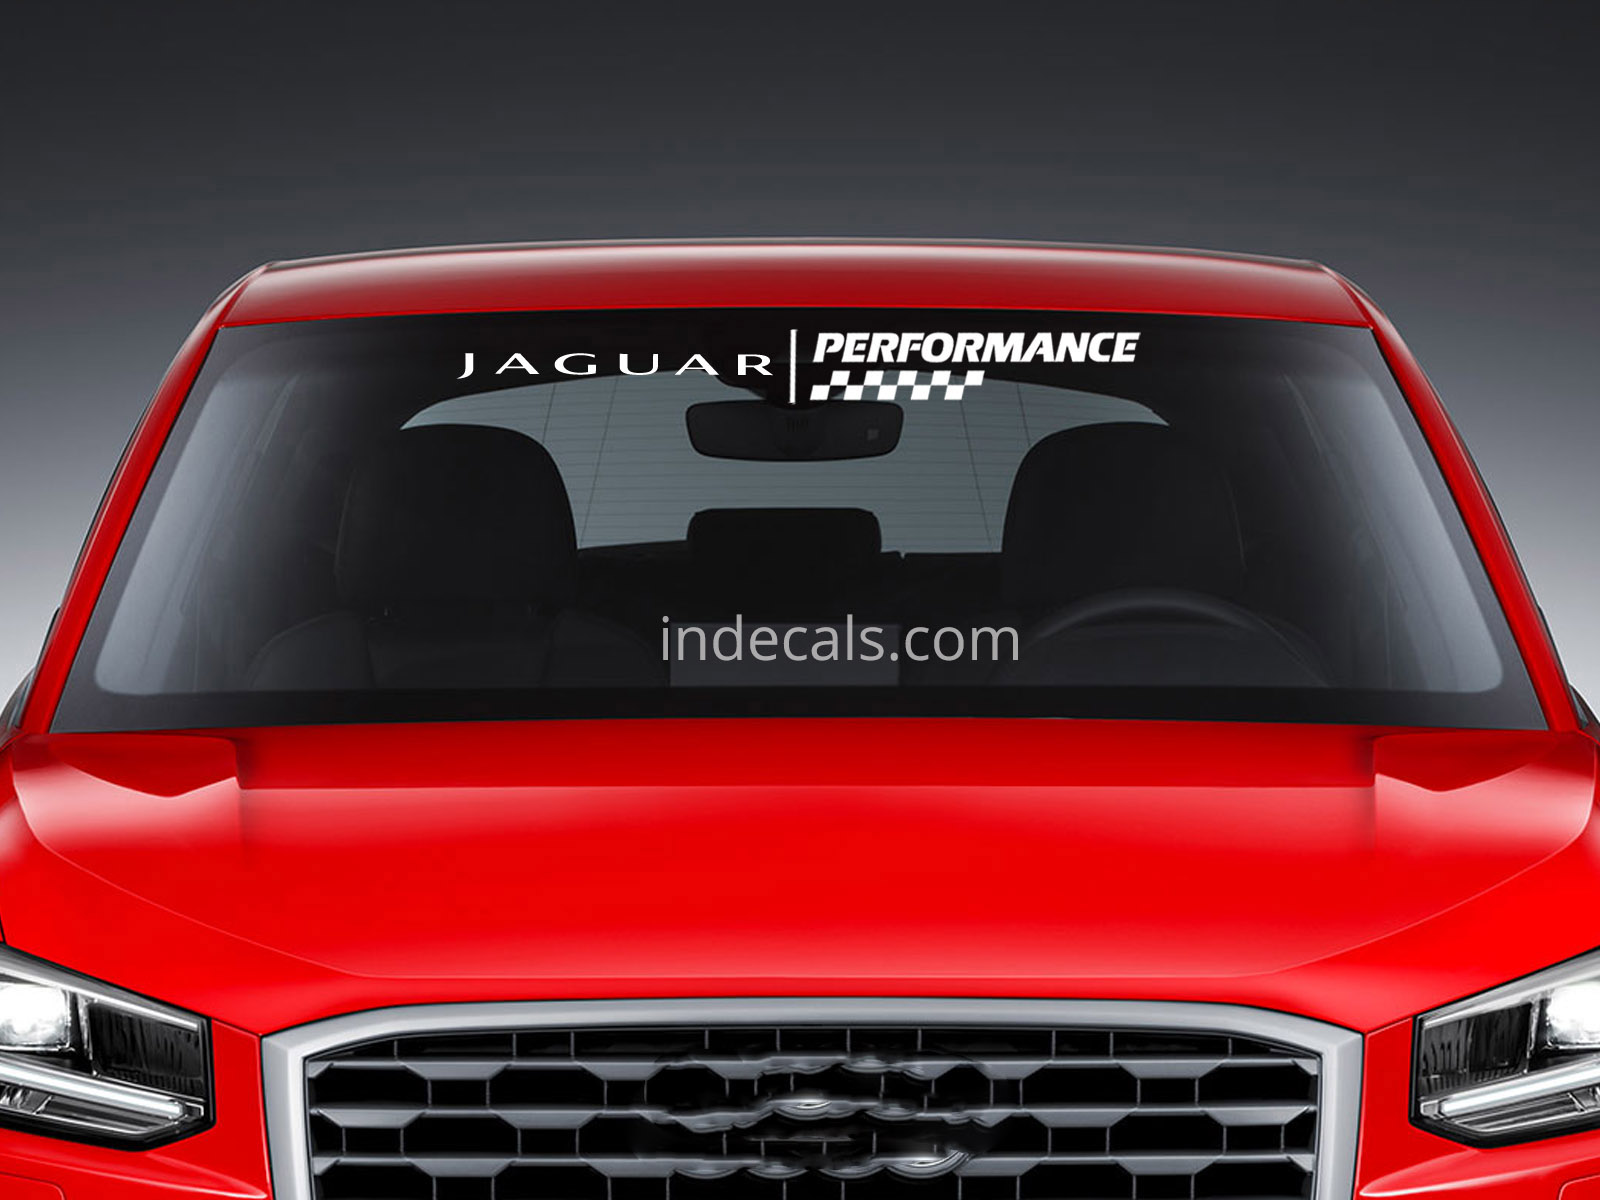 1 x Jaguar Performance Sticker for Windshield or Back Window - White